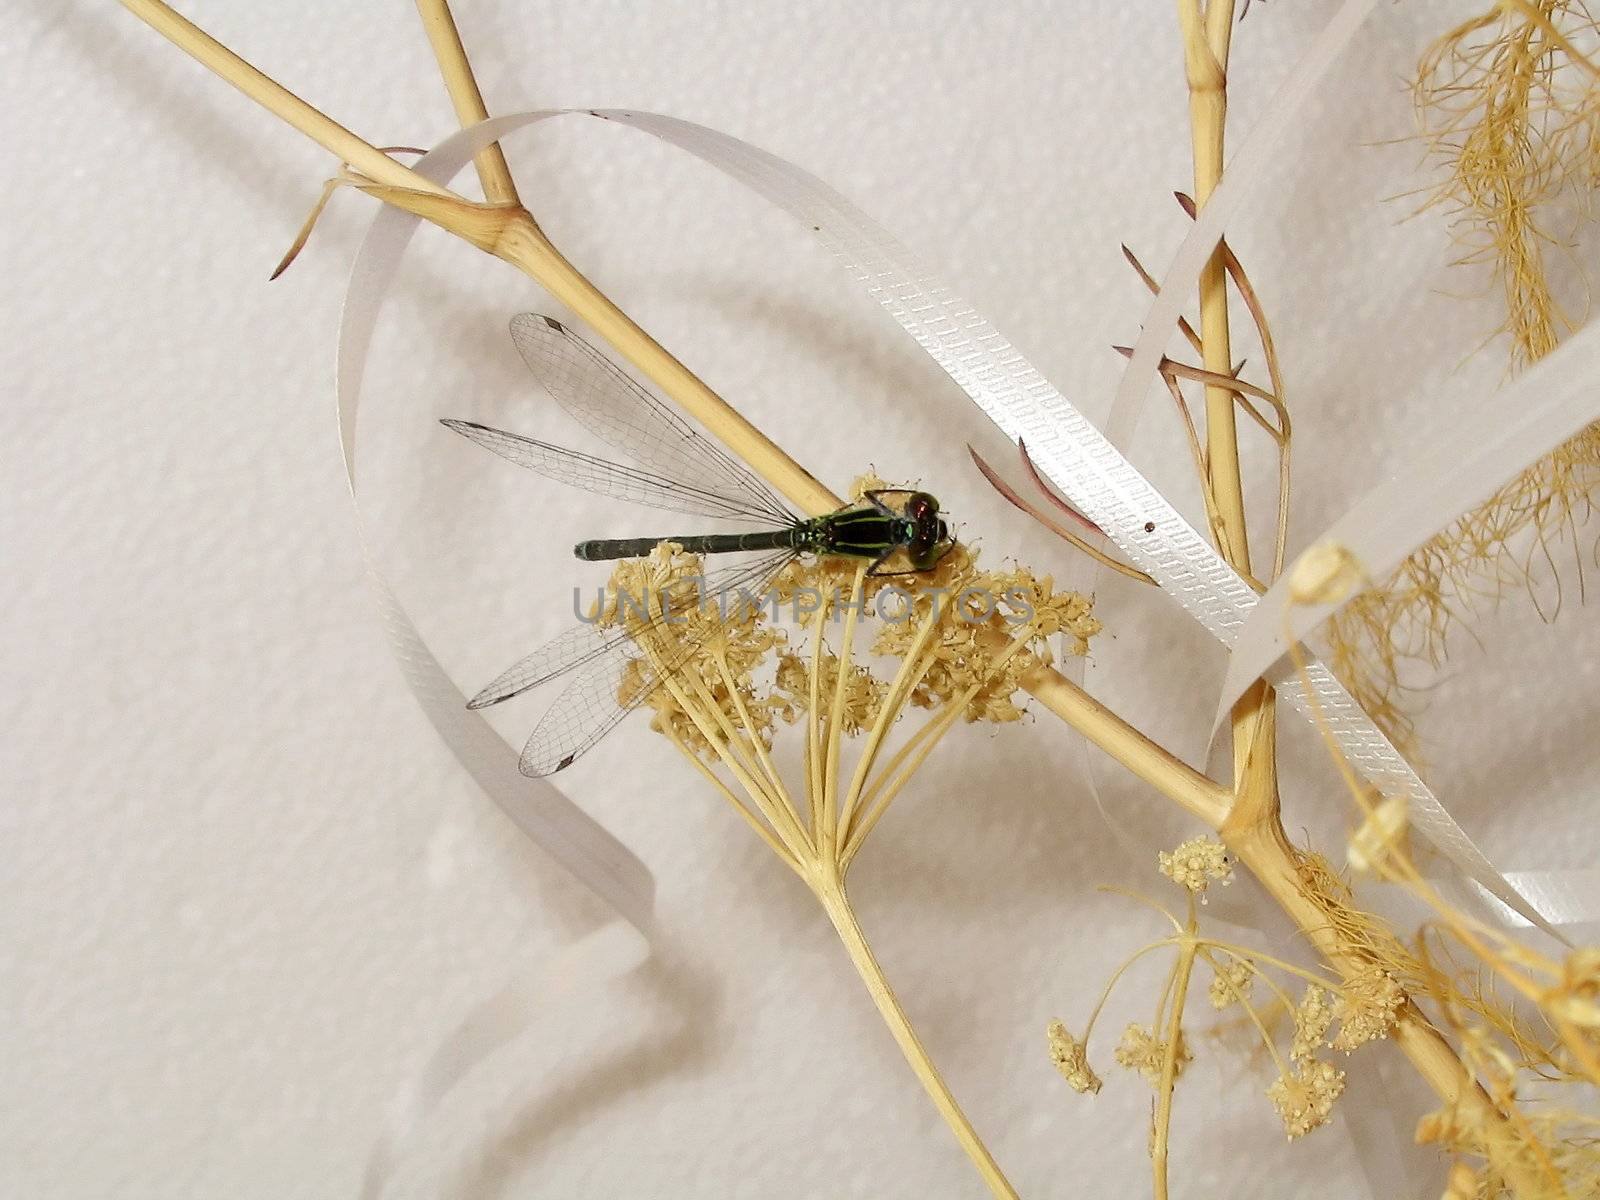 Festive dragonfly 3 by ichip